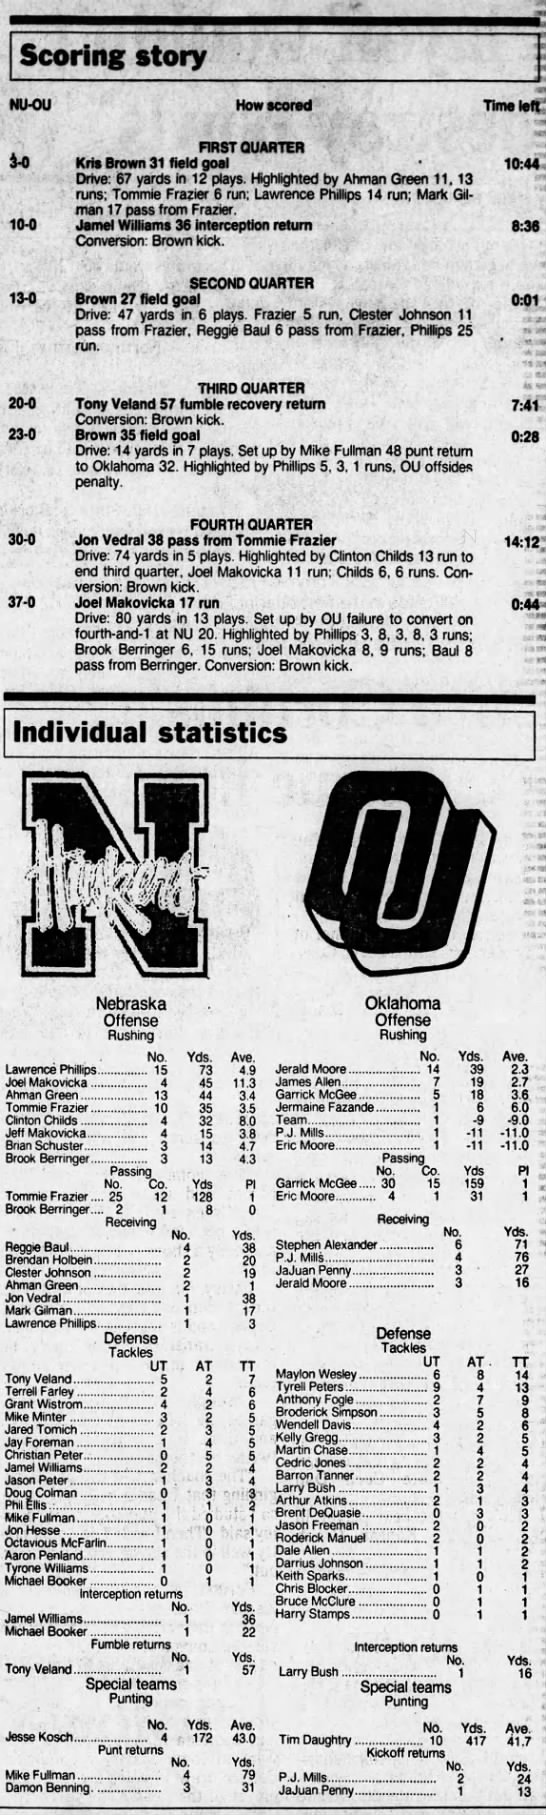 1995 Nebraska-Oklahoma scoring summary - 